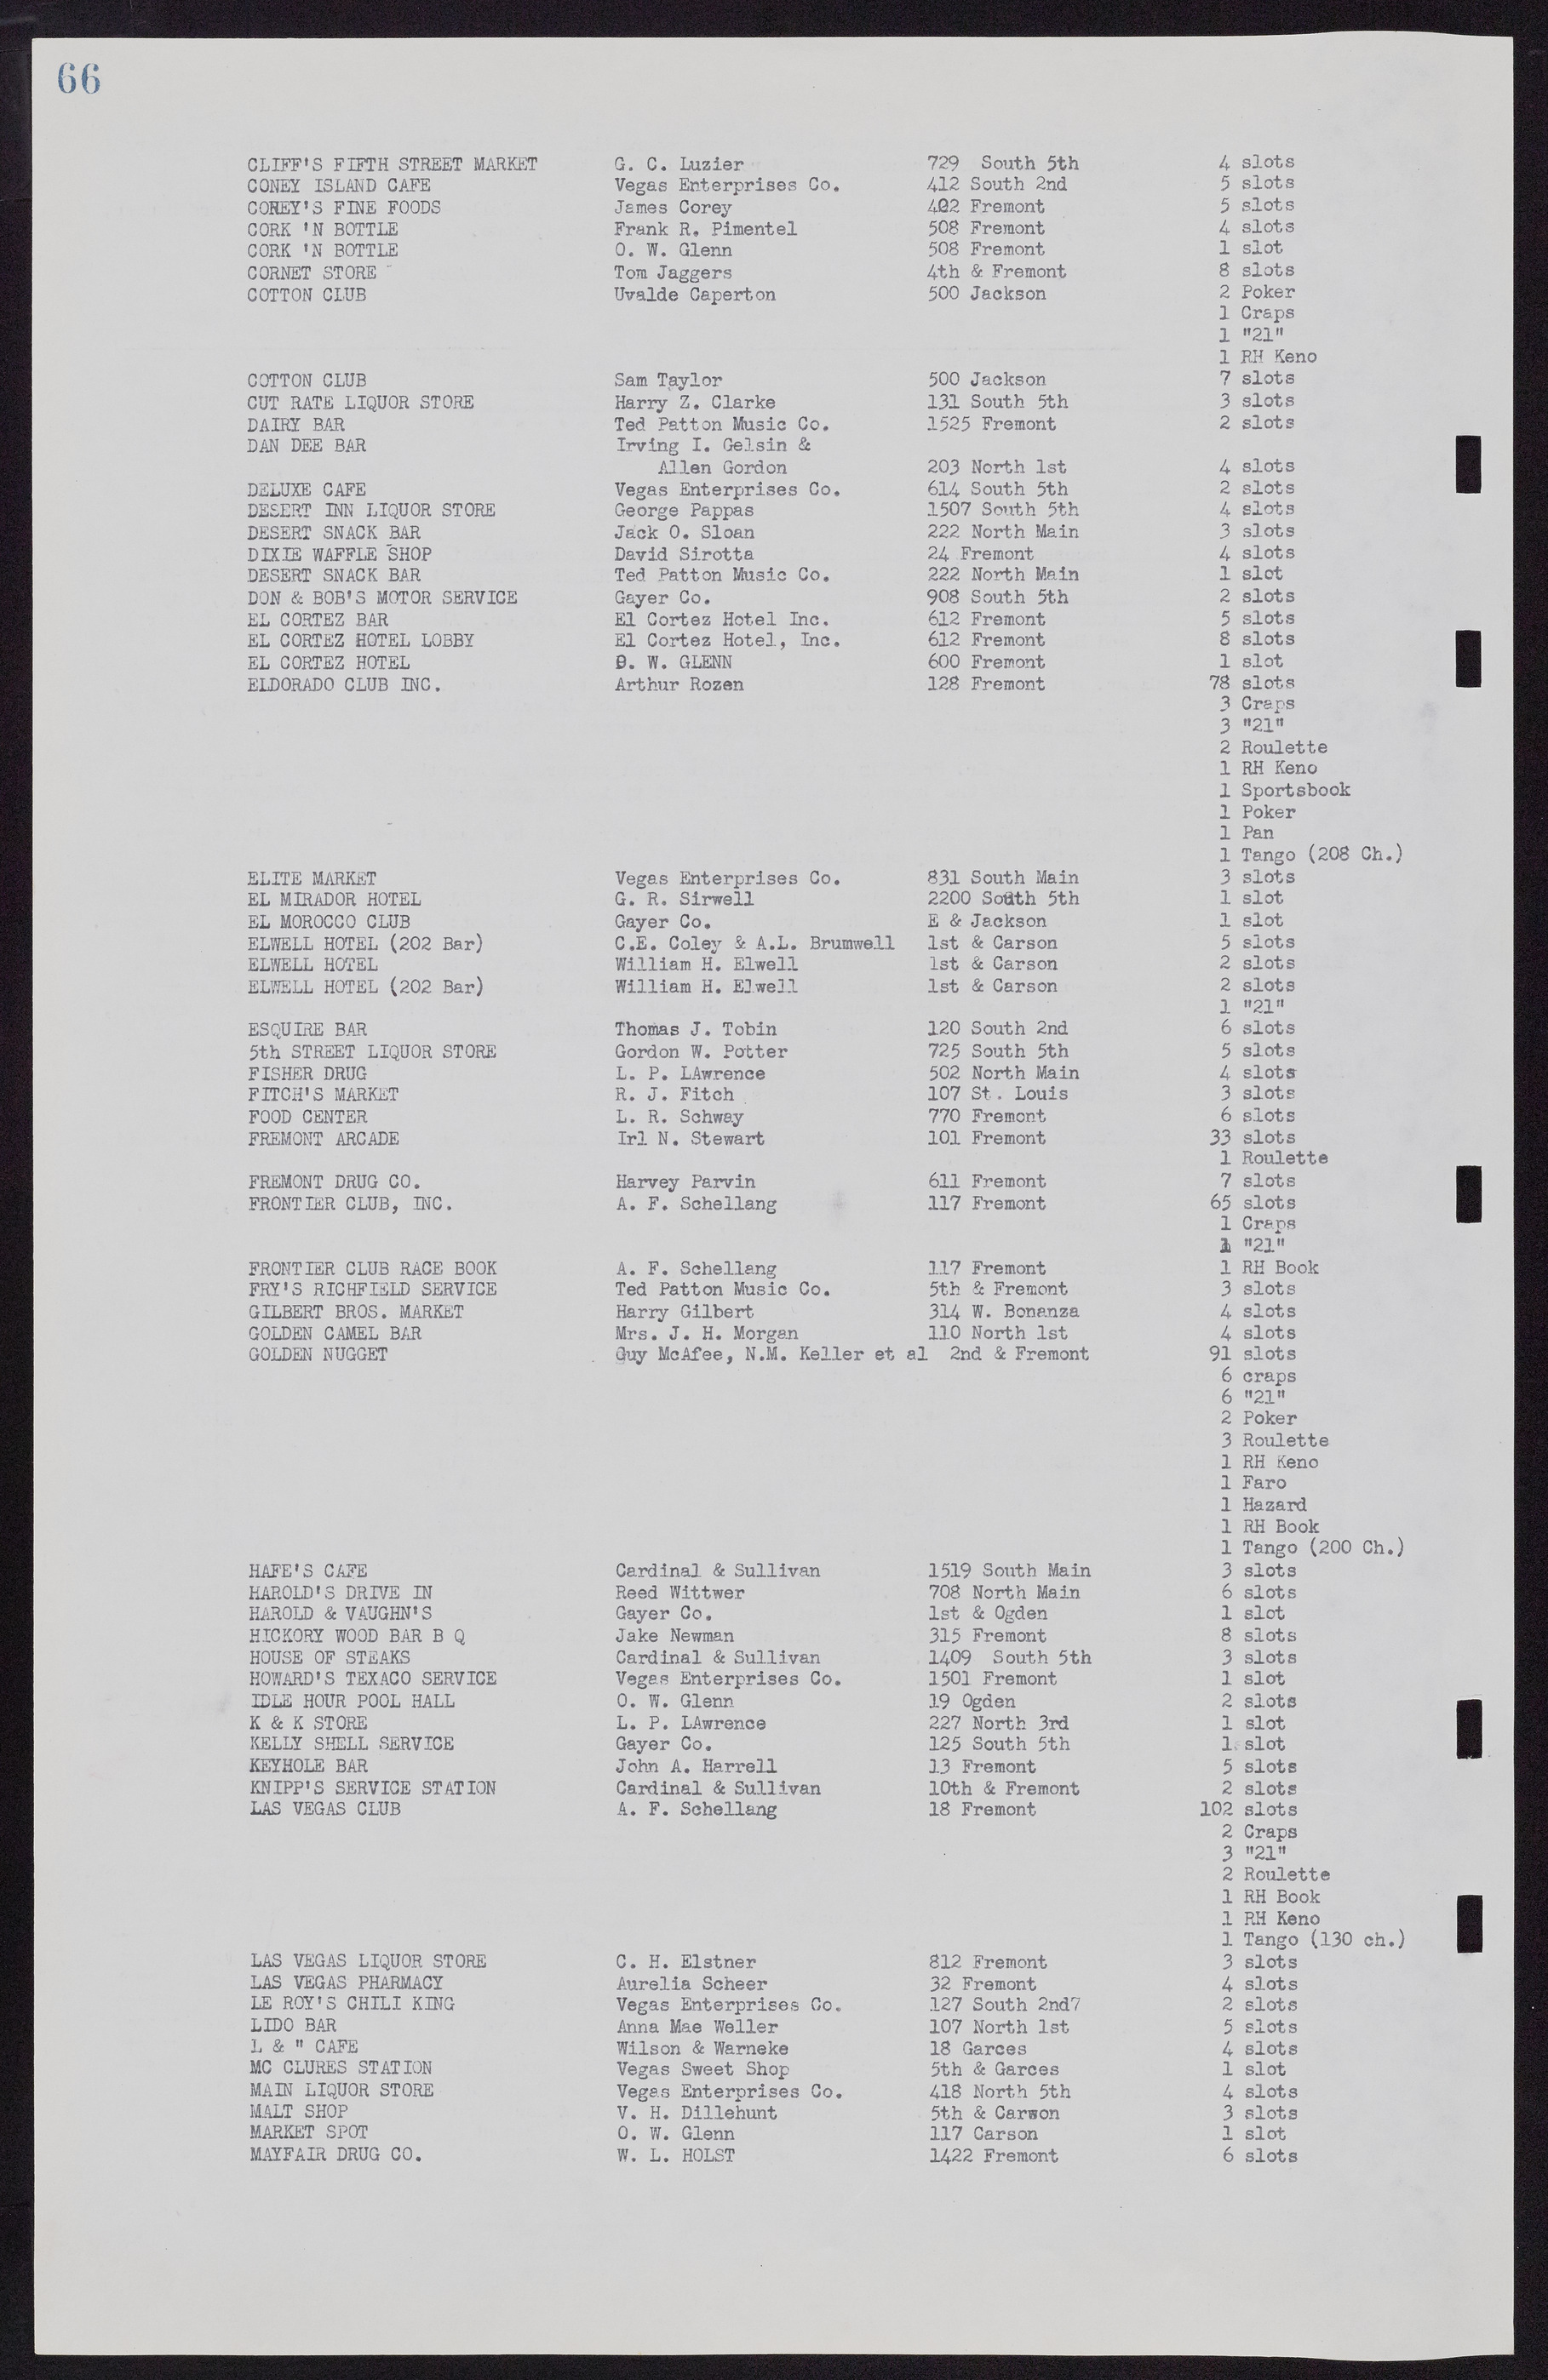 Las Vegas City Commission Minutes, November 7, 1949 to May 21, 1952, lvc000007-74